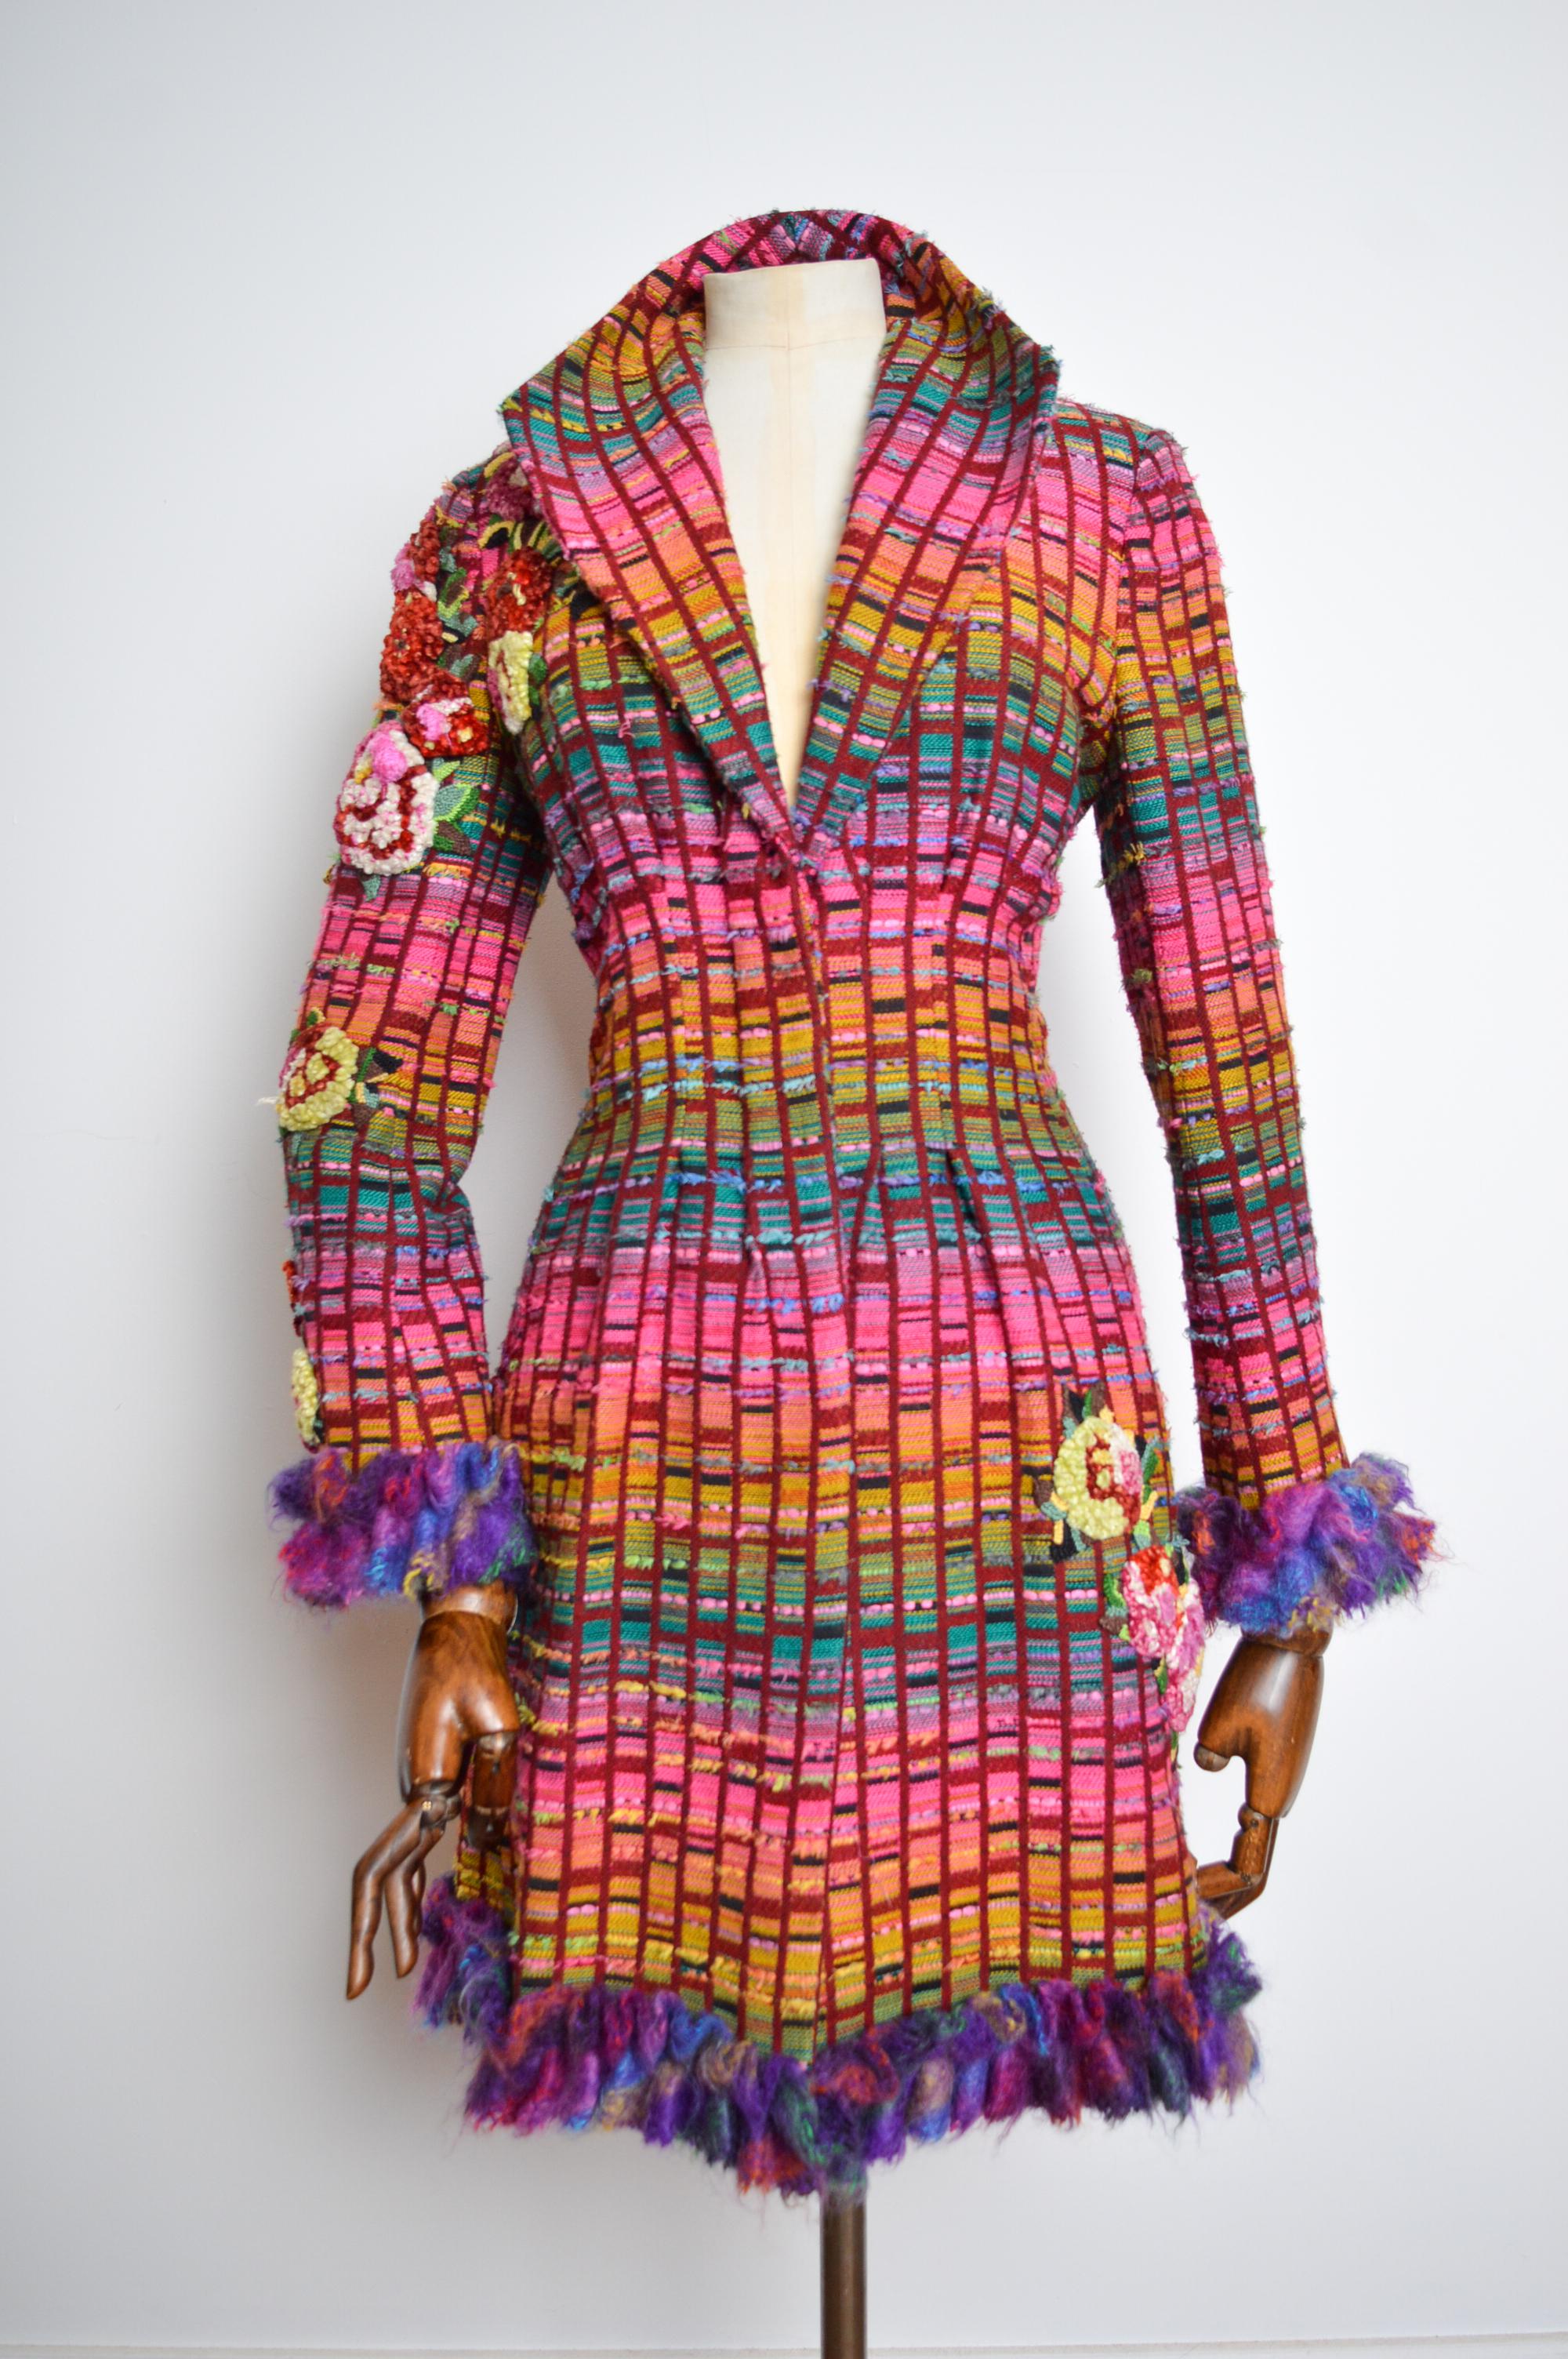 Superb Tweed Mathew Williamson Jewel Tone Embroidered Embellished Coat 2